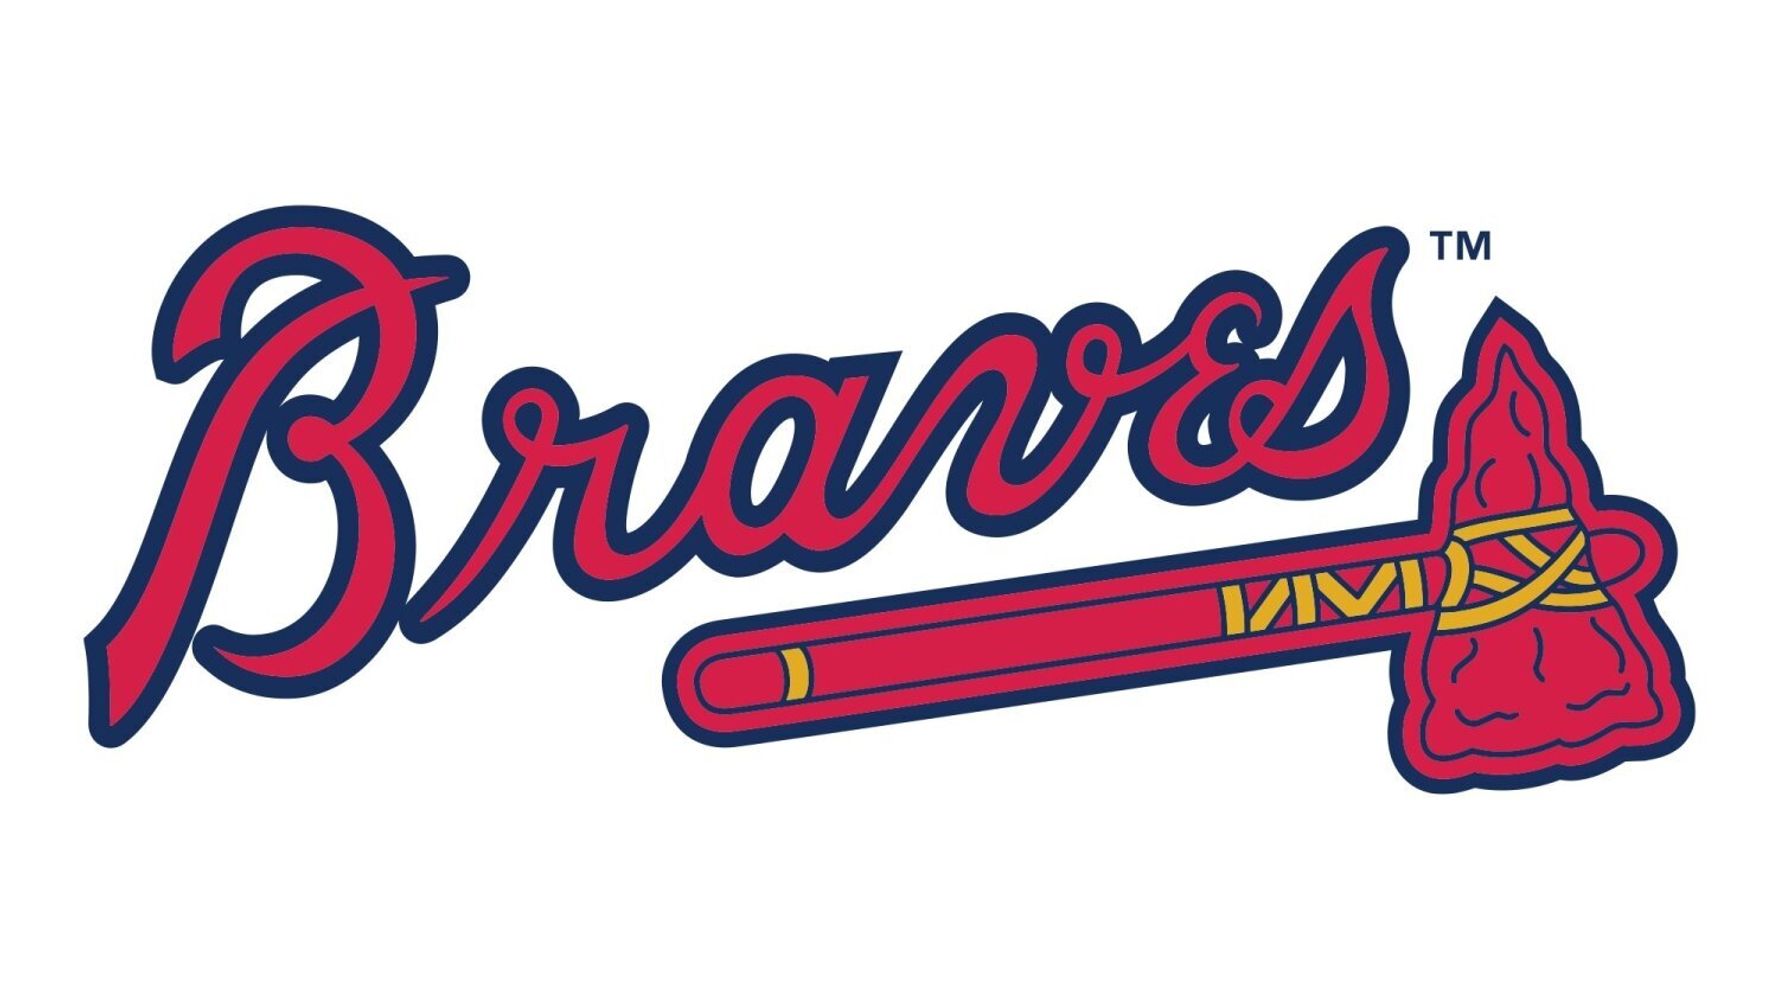 Braves' tomahawk chop: History of Atlanta's controversial cheer